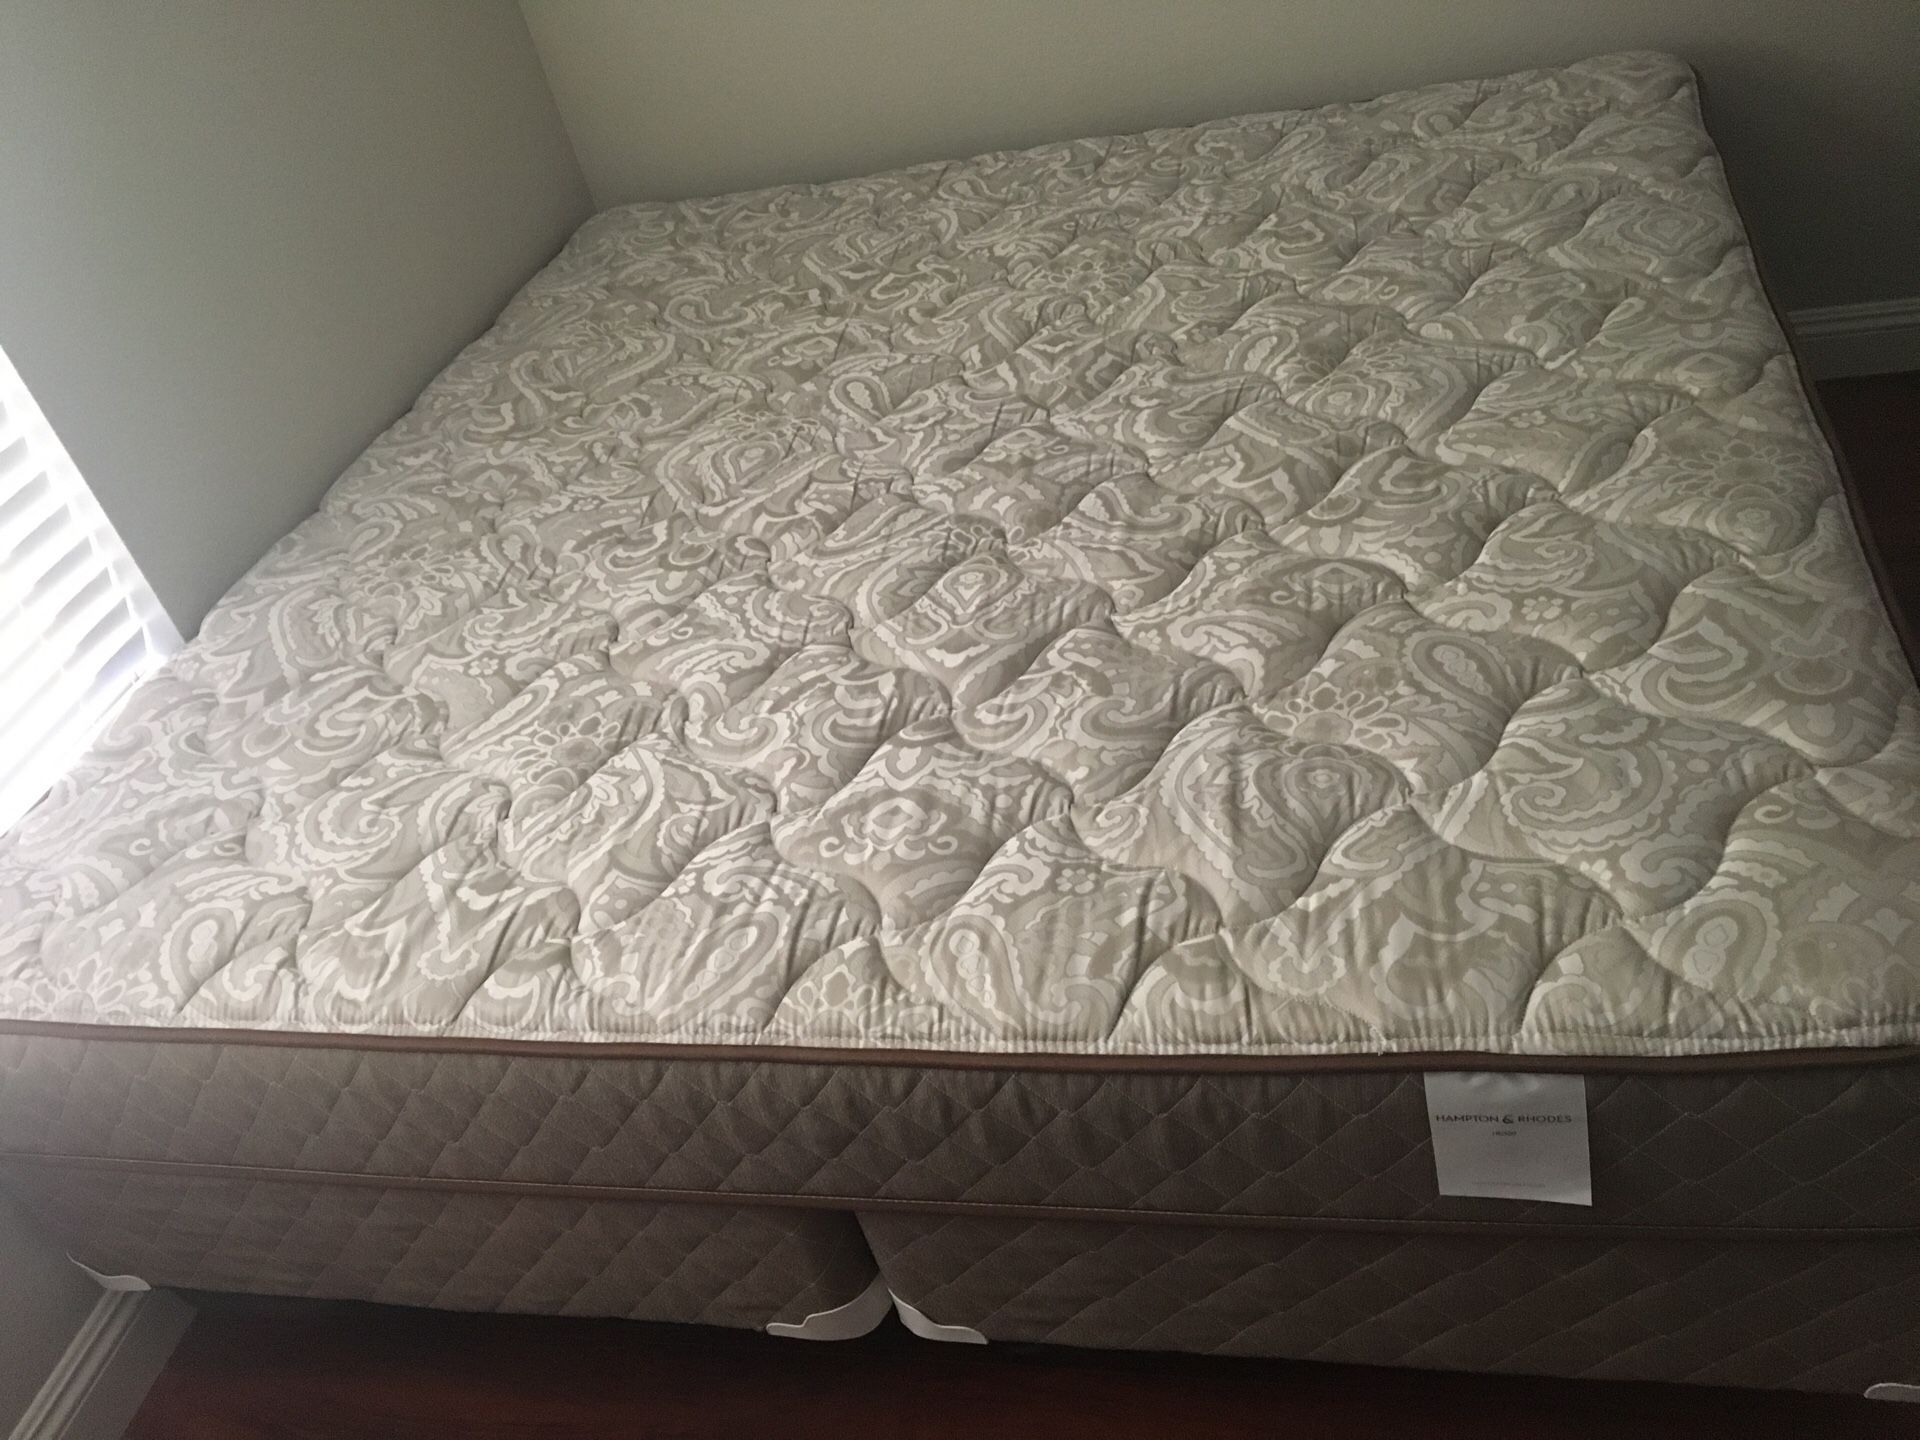 hampton and rhodes hr300 9 plush mattress review